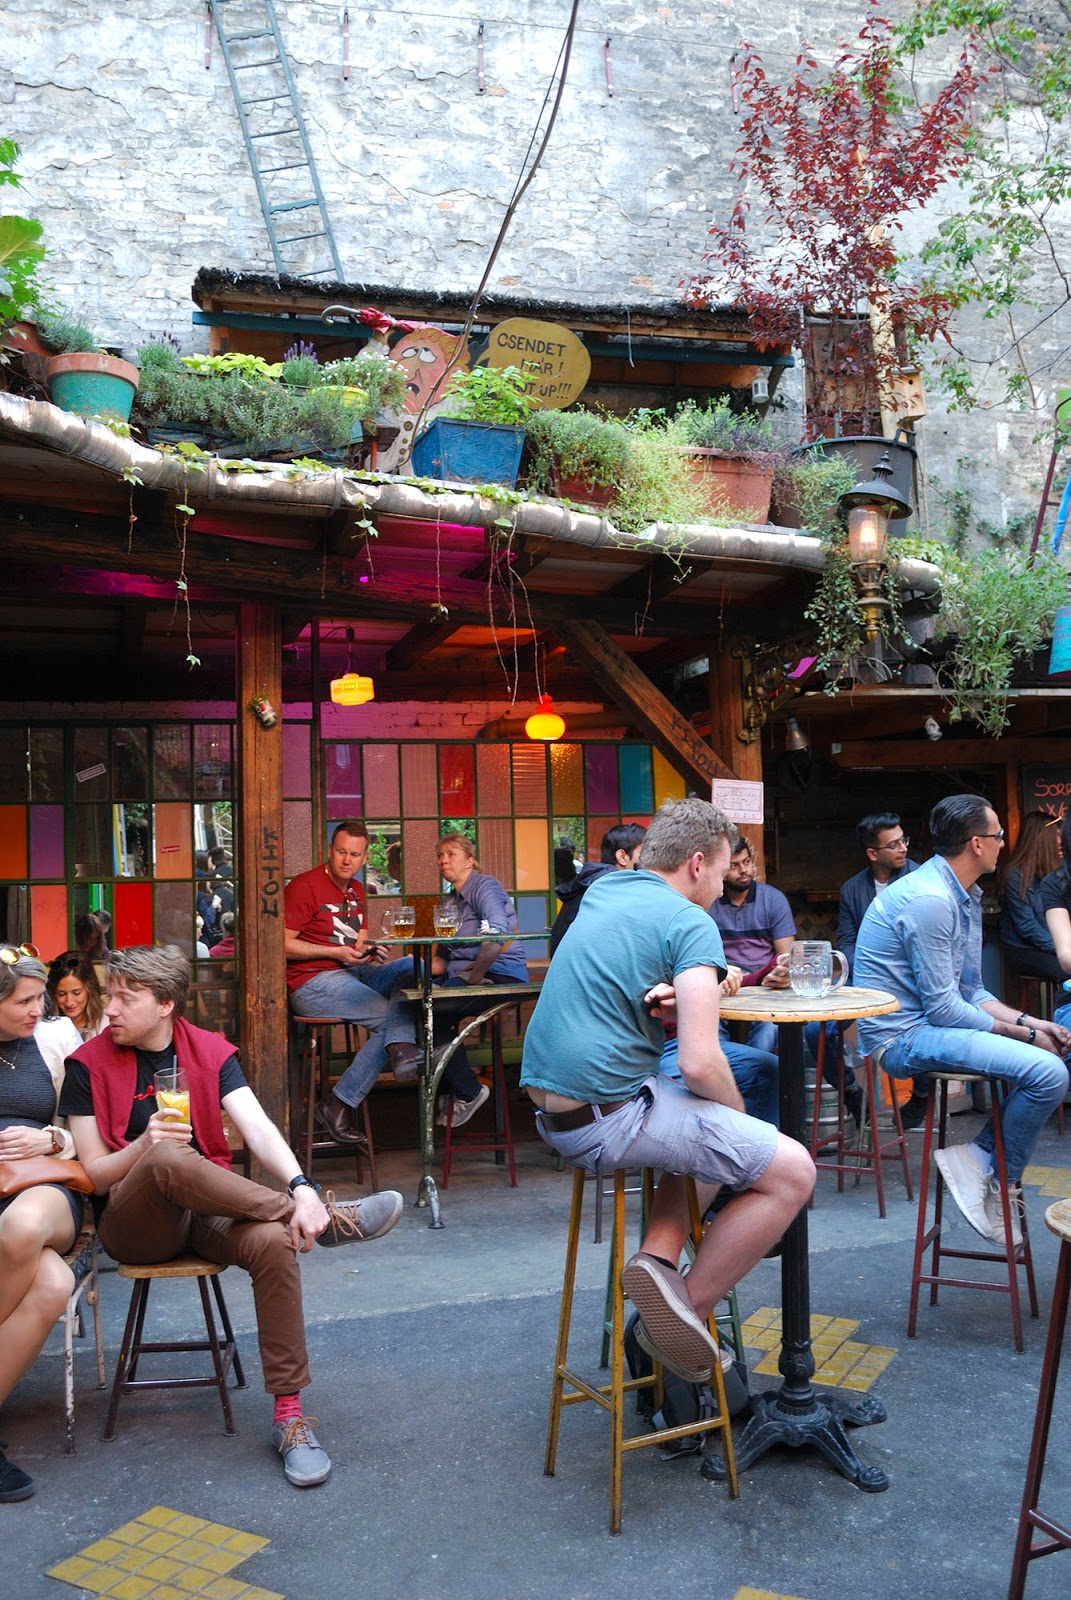 budapest guide itinerary instagram worthy spot sights landmarks hungary szimpla kert ruin bar pub